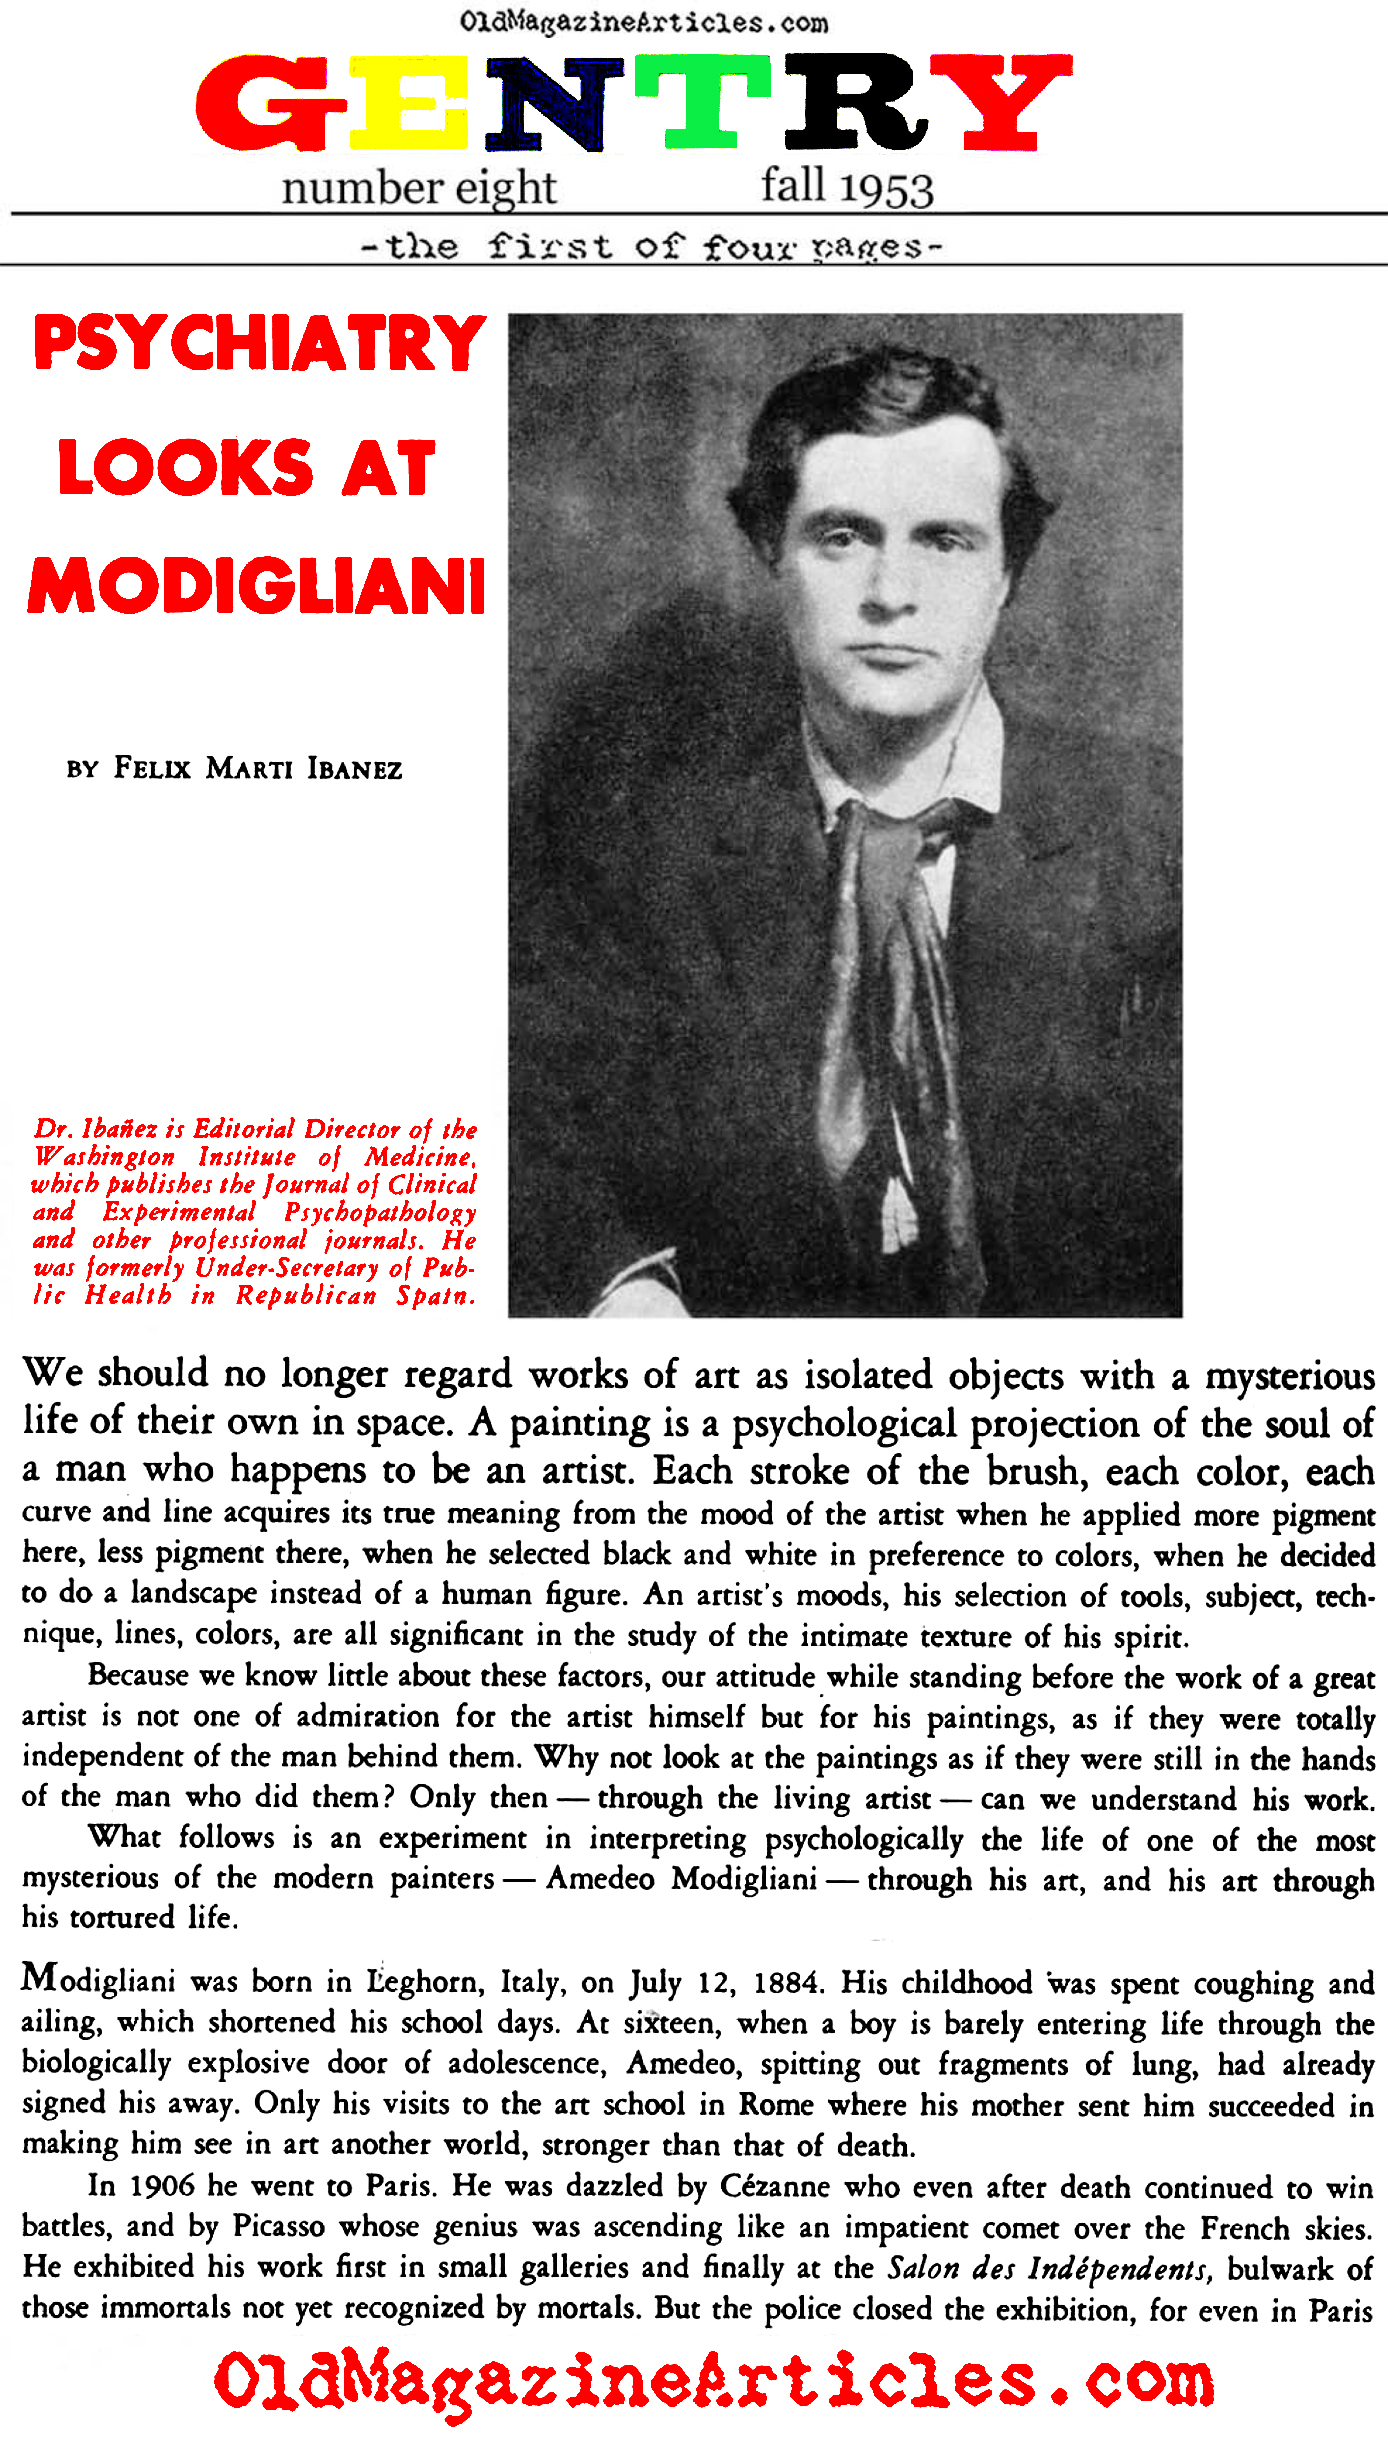 The Psycho-Sexual Struggle within Amedeo Modigliani (Gentry Magazine, 1953)